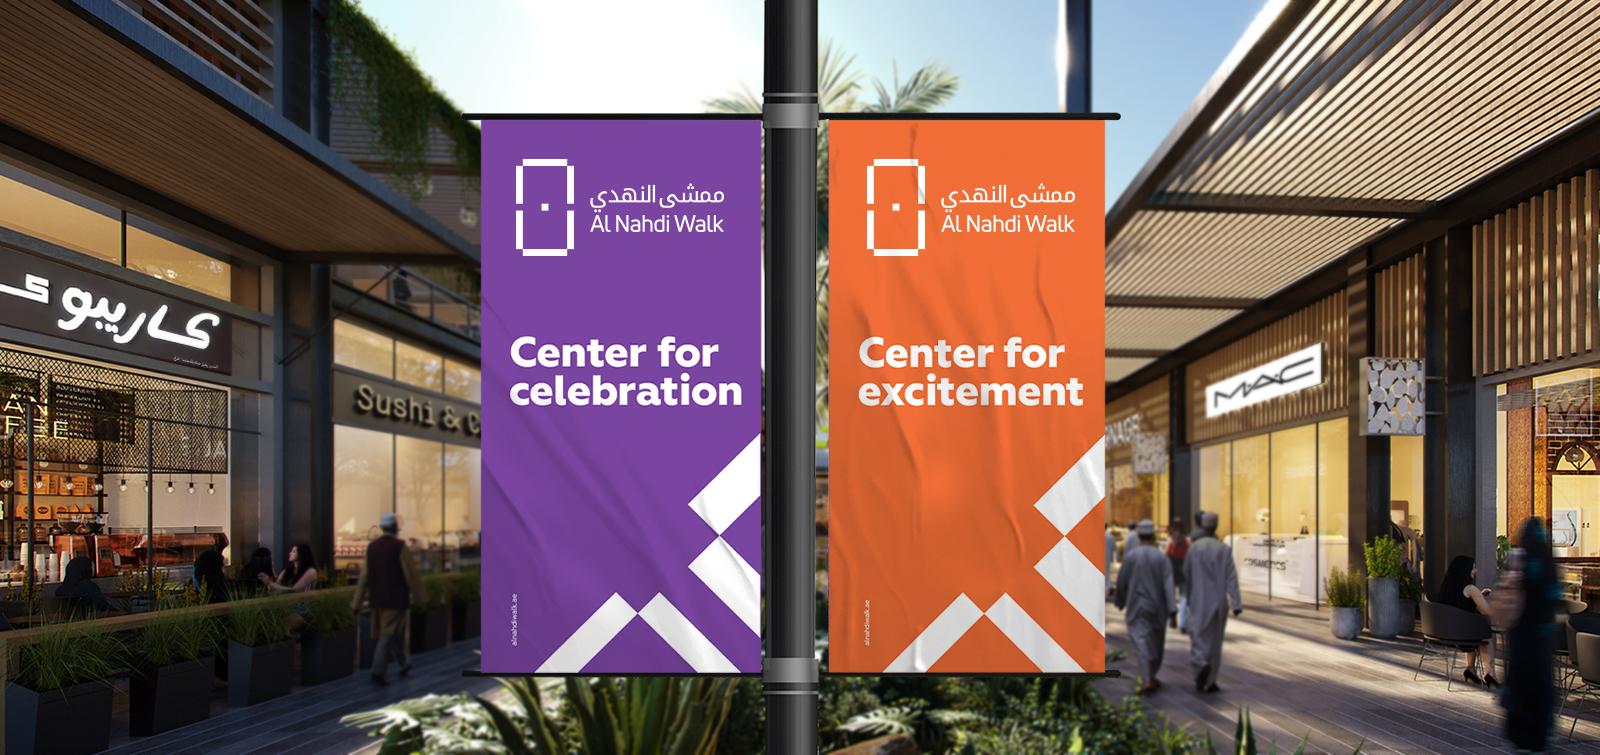 Al Nahdi Walk center for celebration and excitement